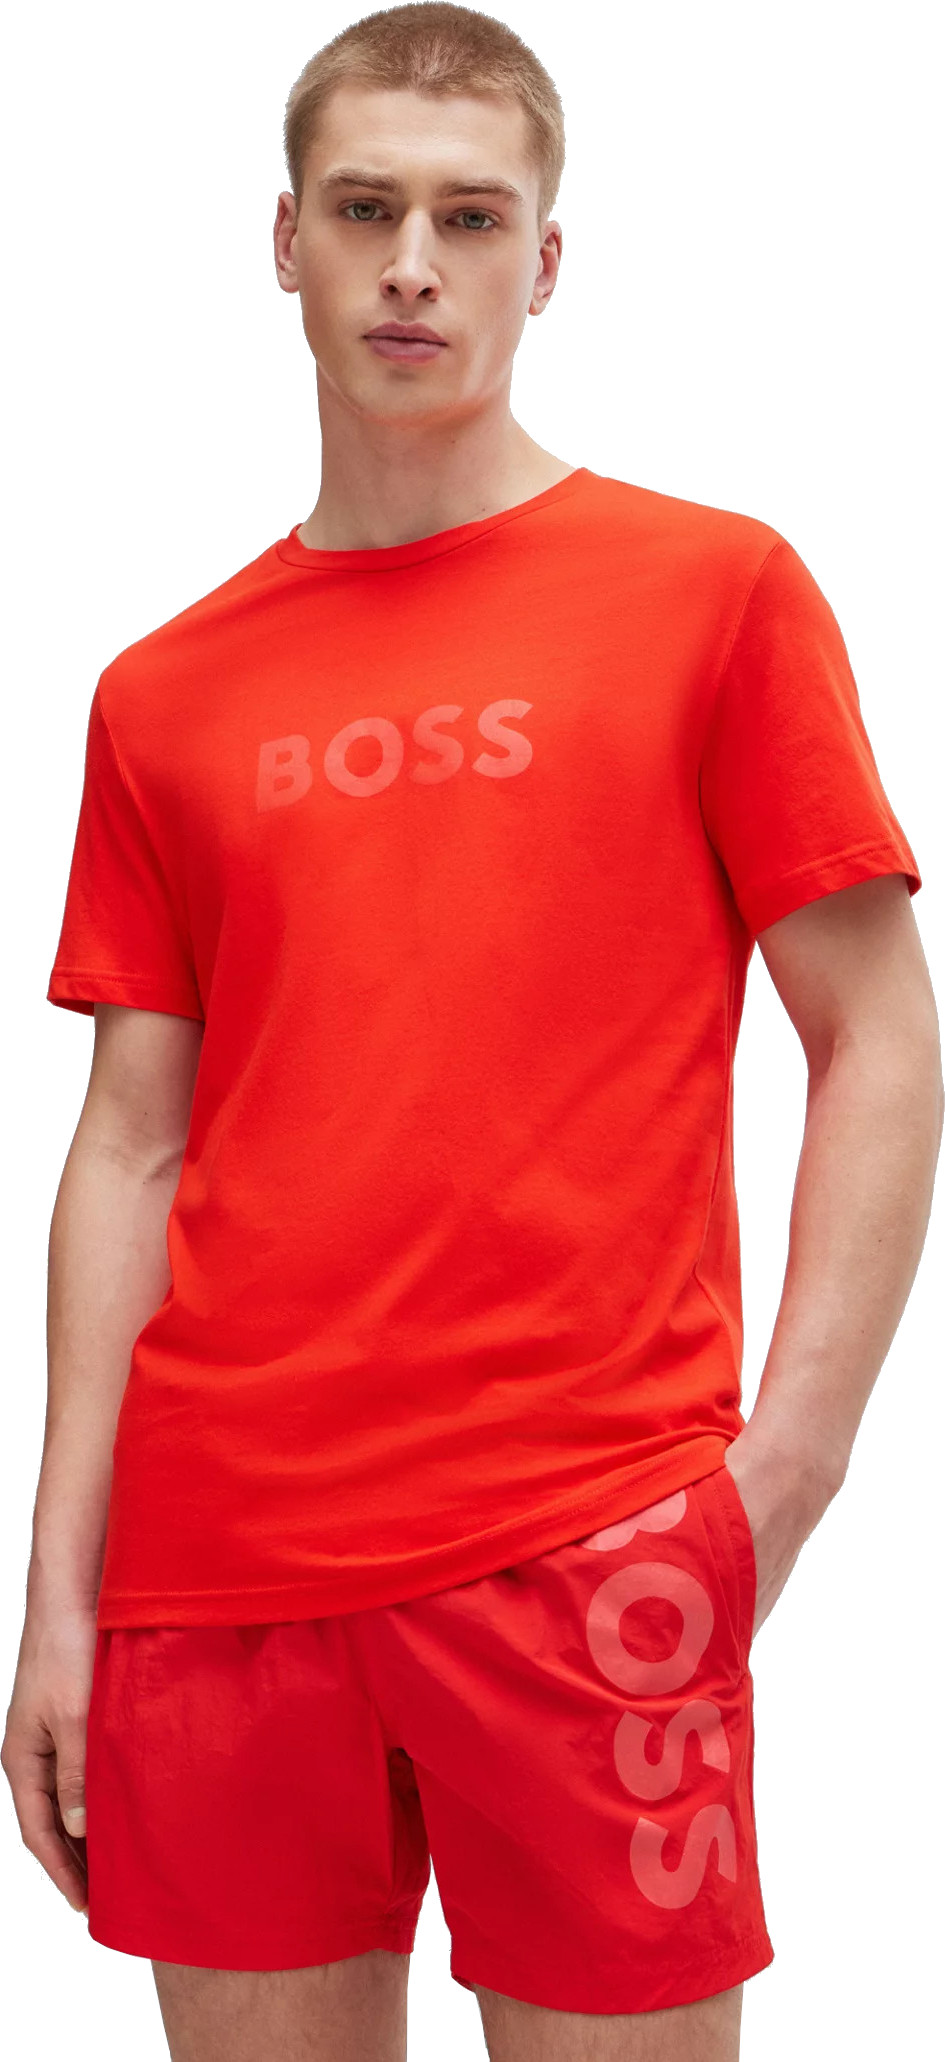 Hugo Boss Pánské triko BOSS 50503276-627 L